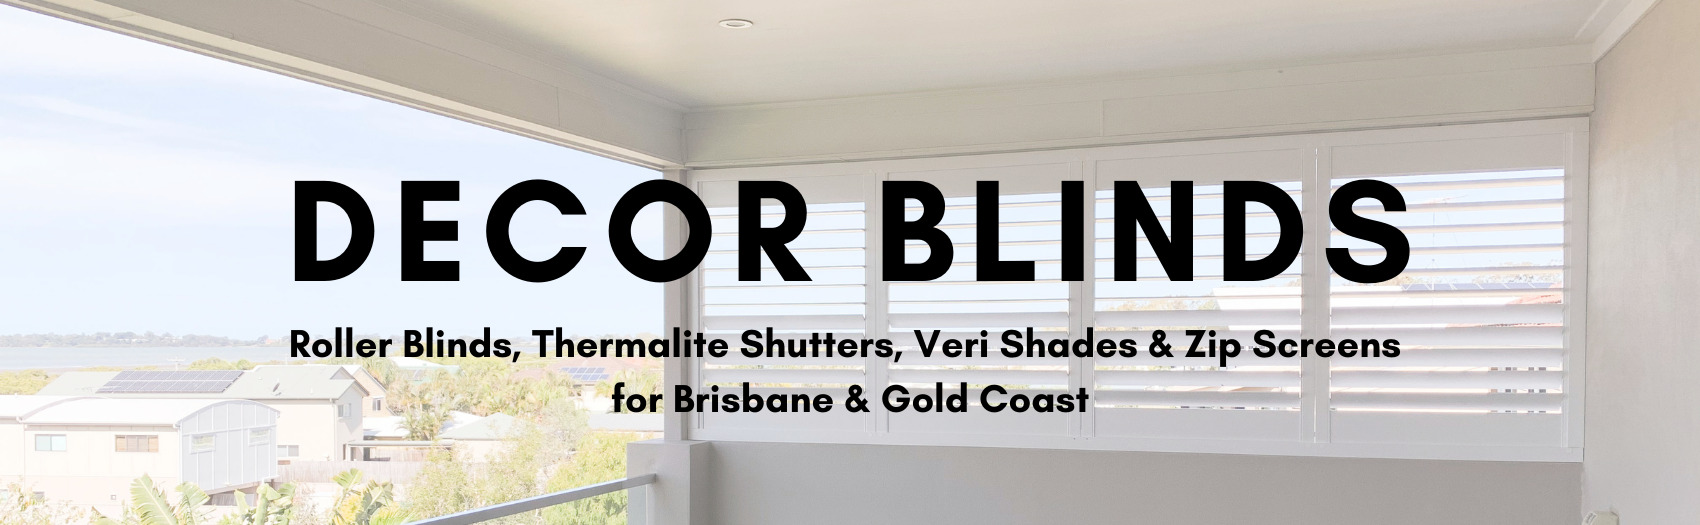 decor blinds brisbane gold coast blinds shutters